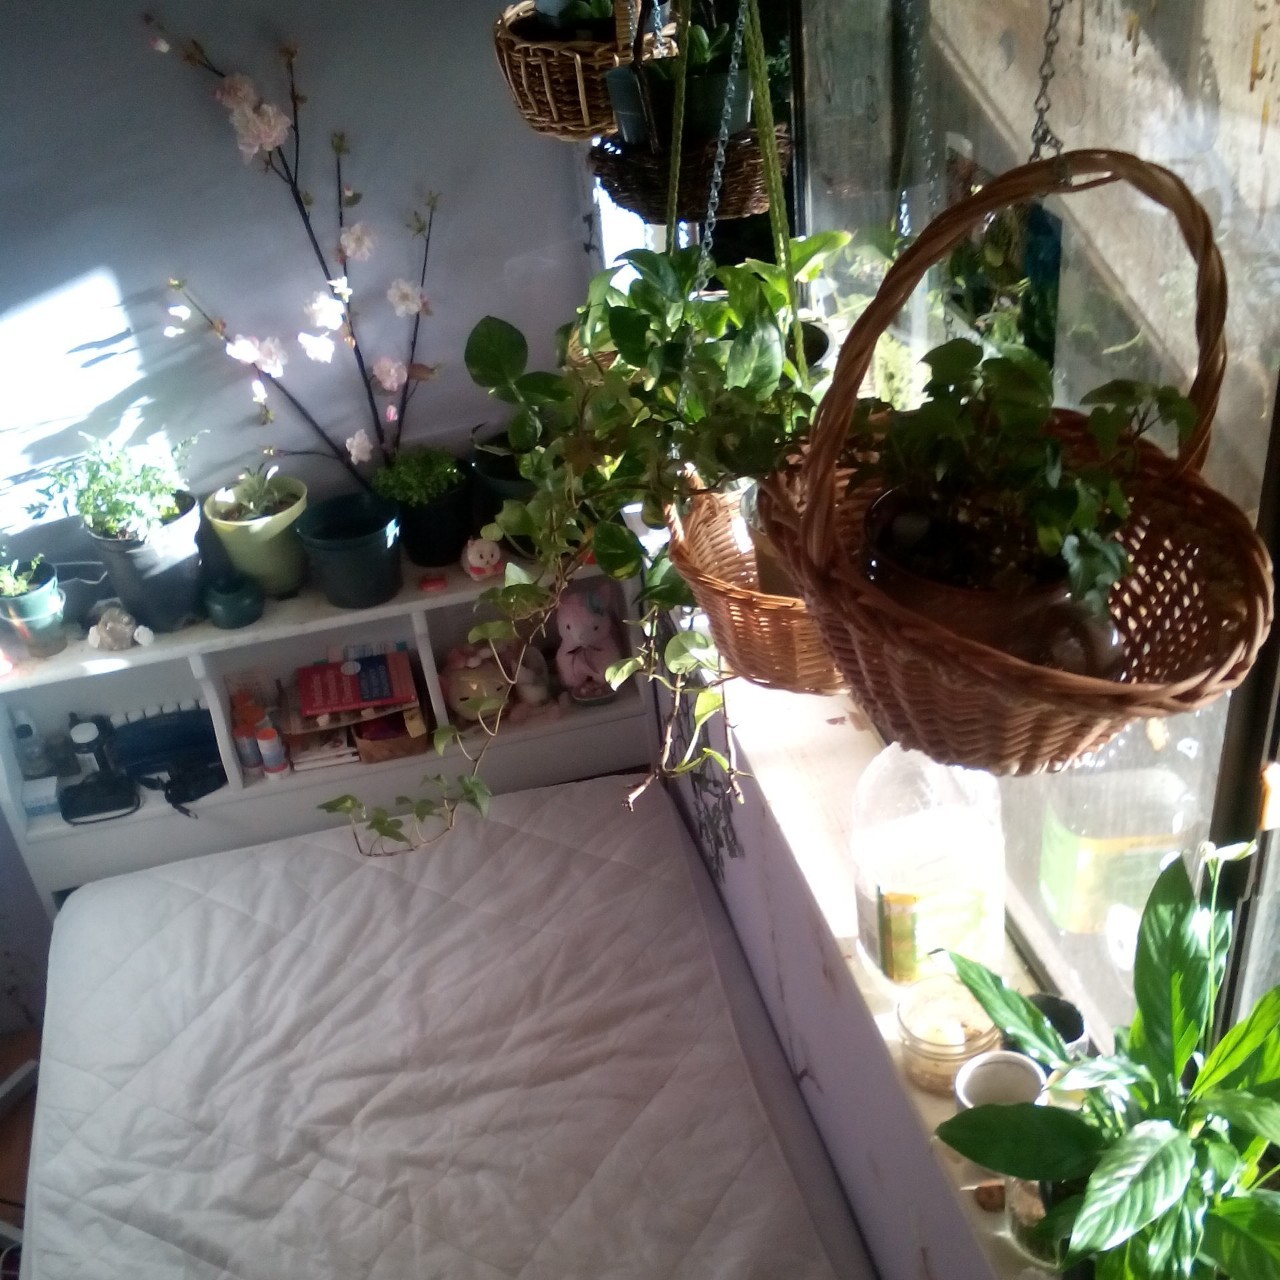 faerie-planet:  Bedside plants